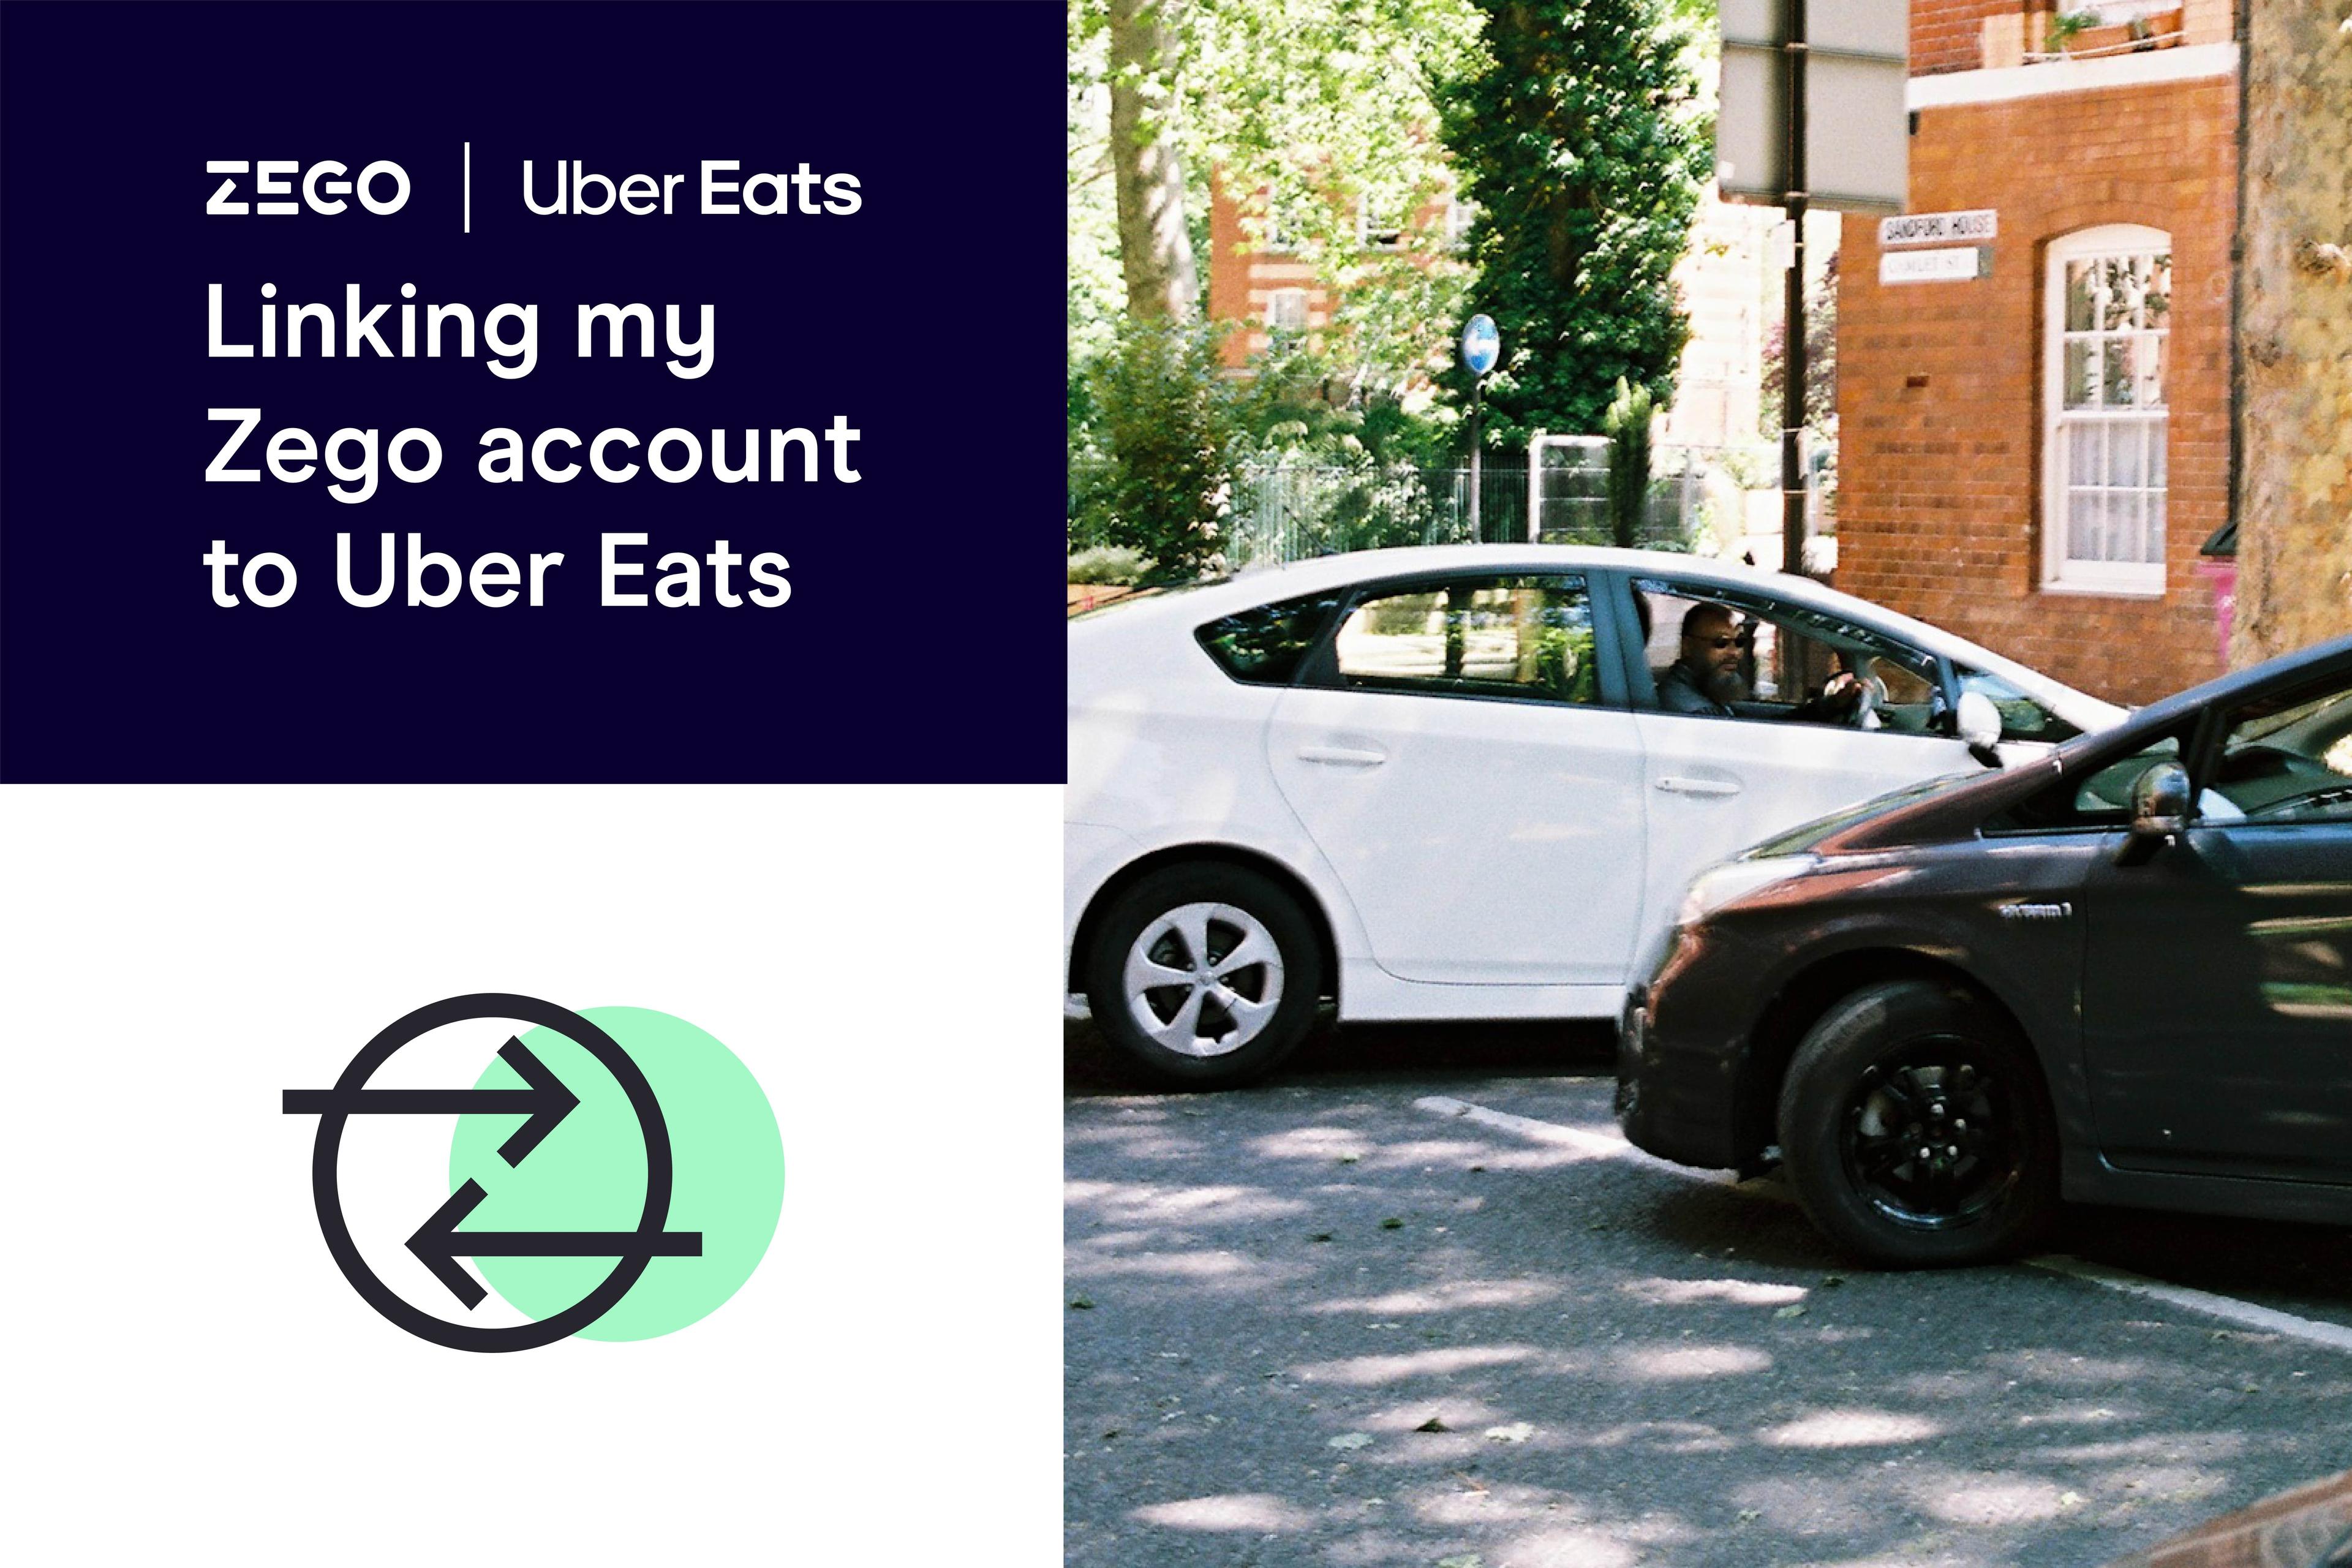 Linking my Zego account with Uber Eats